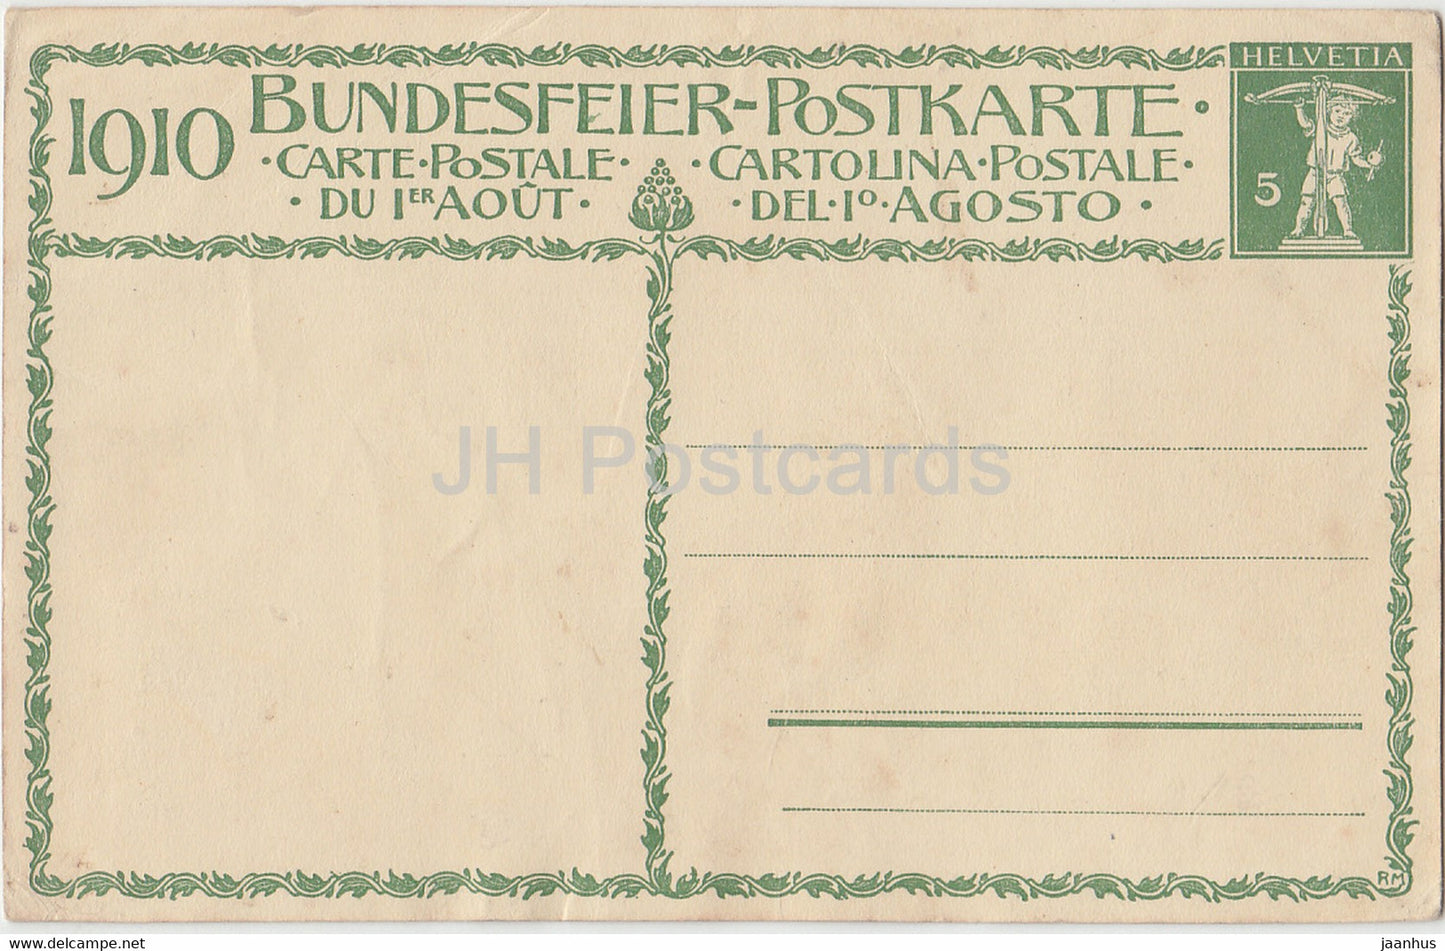 Die Wachter der Heimat Pro Patria - Bundesfeier Postkarte - carte postale ancienne - 1910 - Suisse - inutilisé